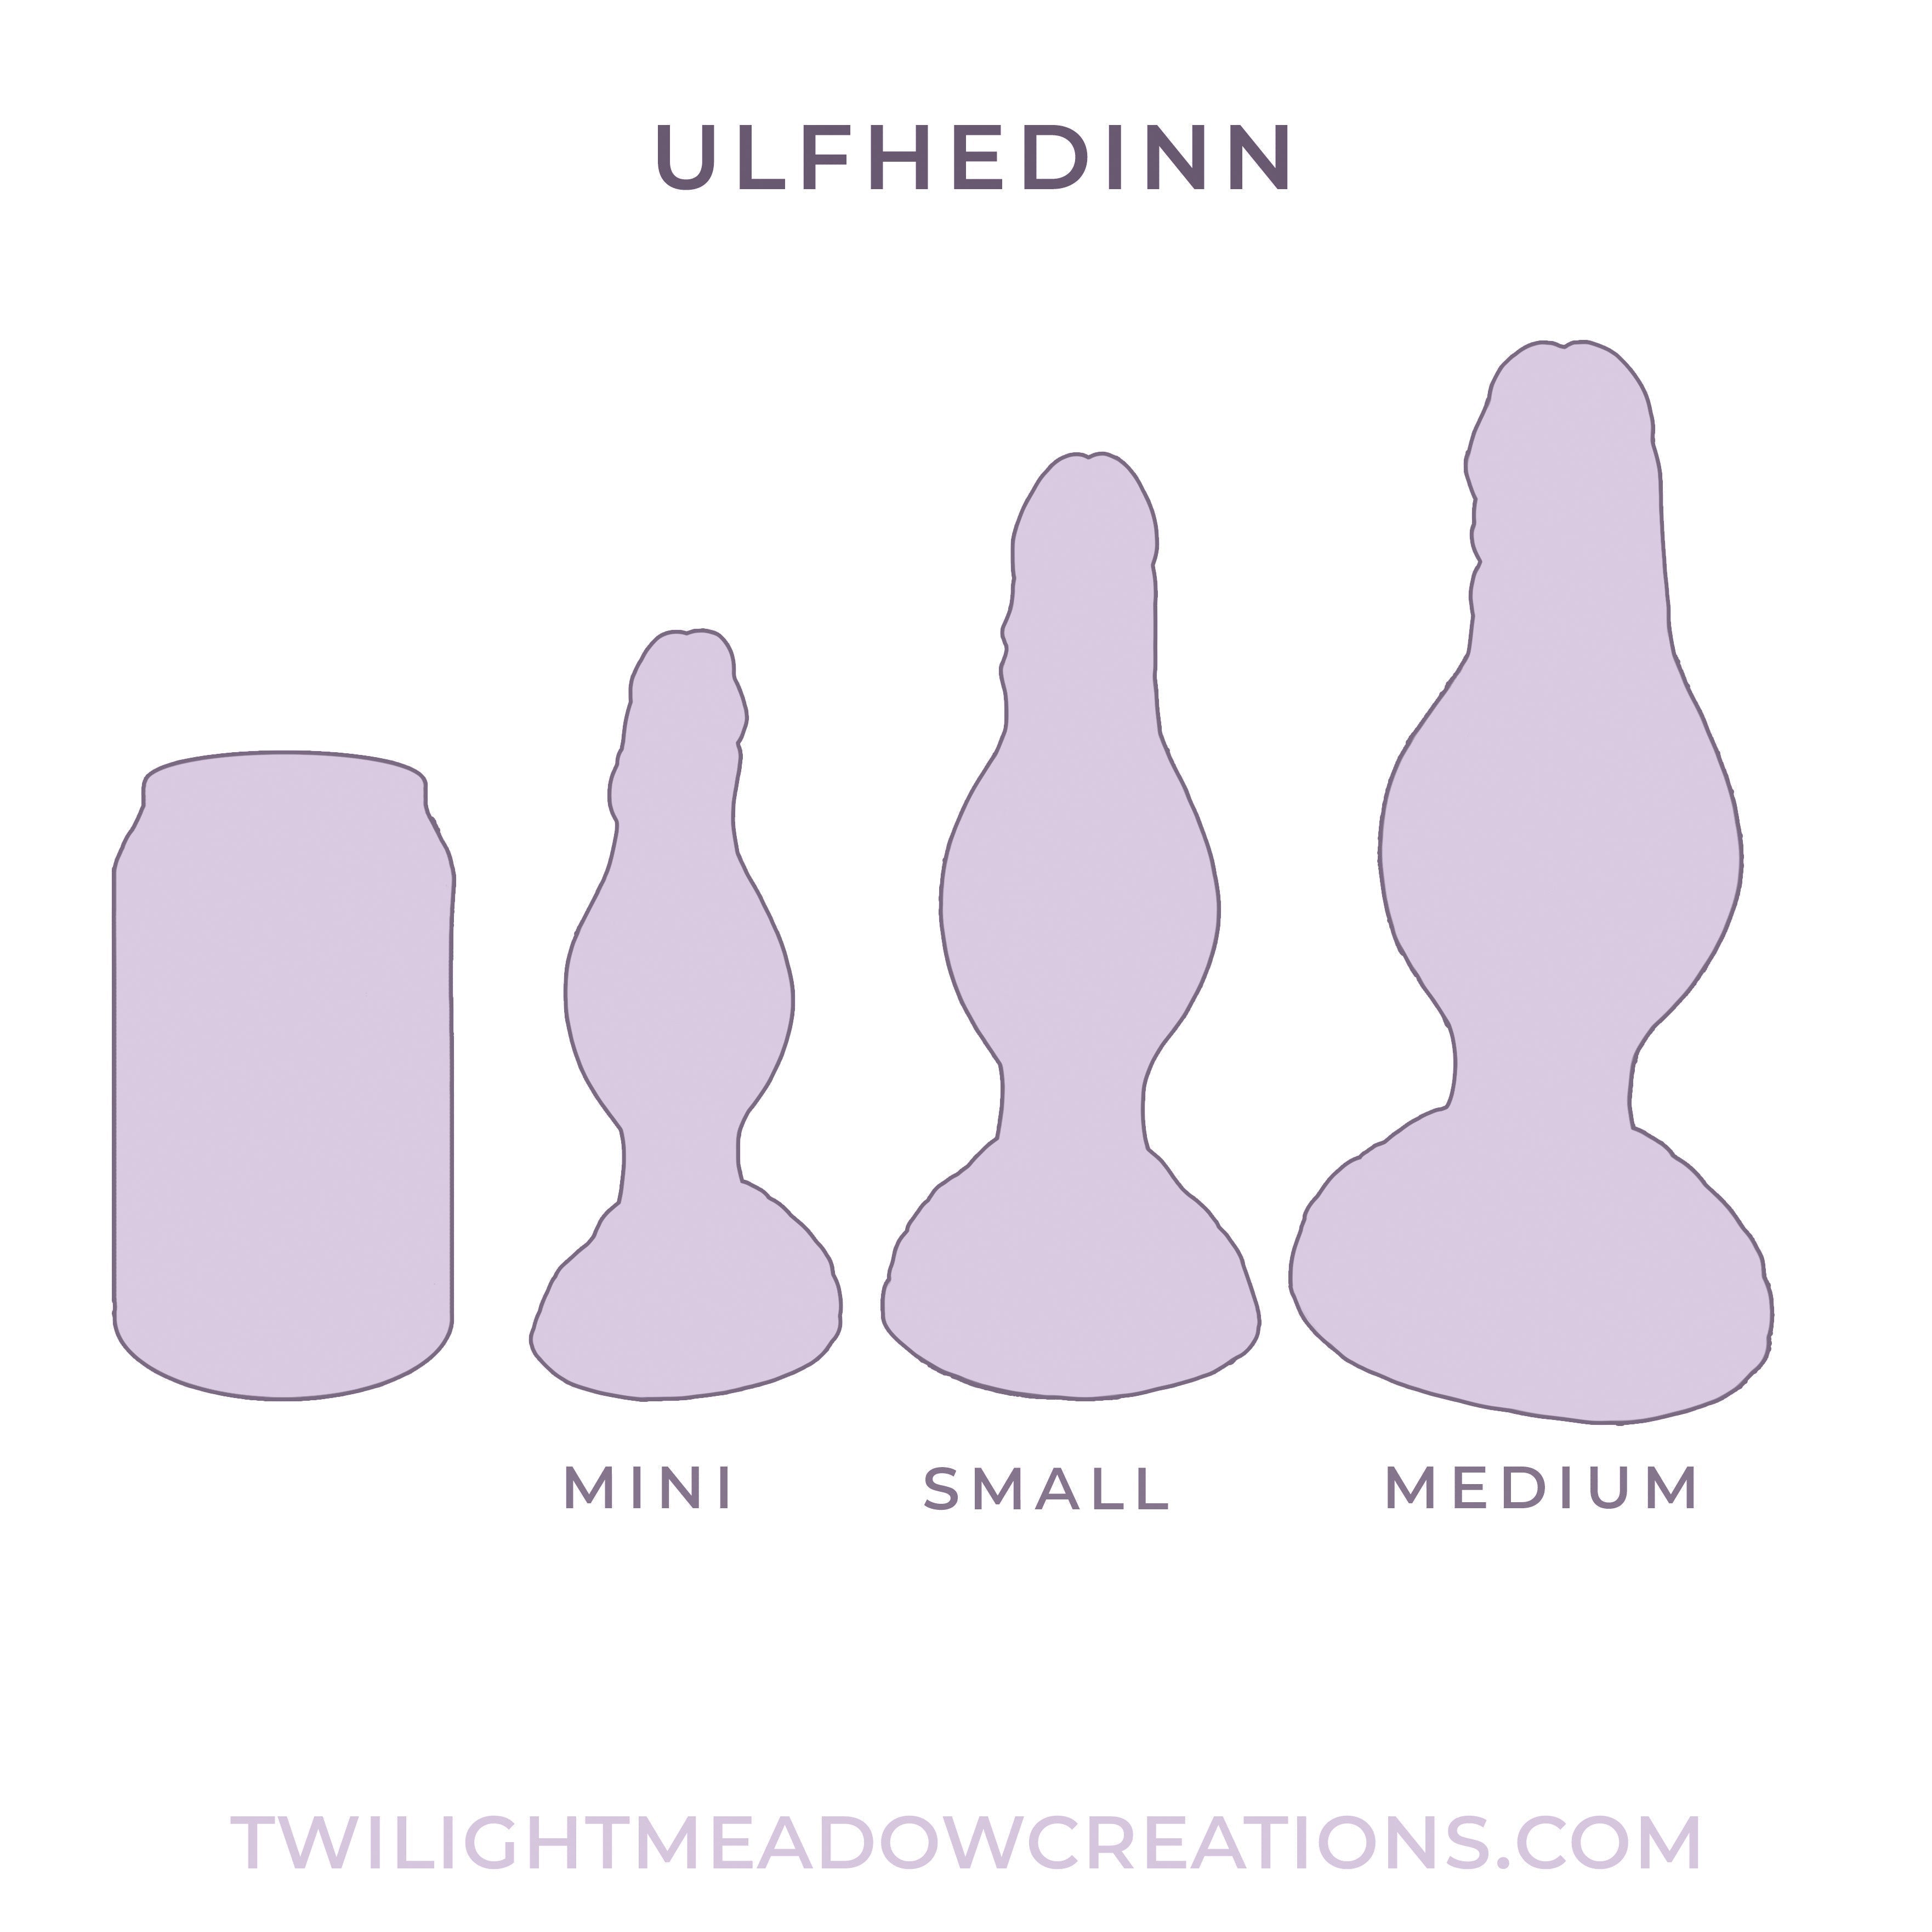 Medium Ulfhedinn (Firmness: Medium)